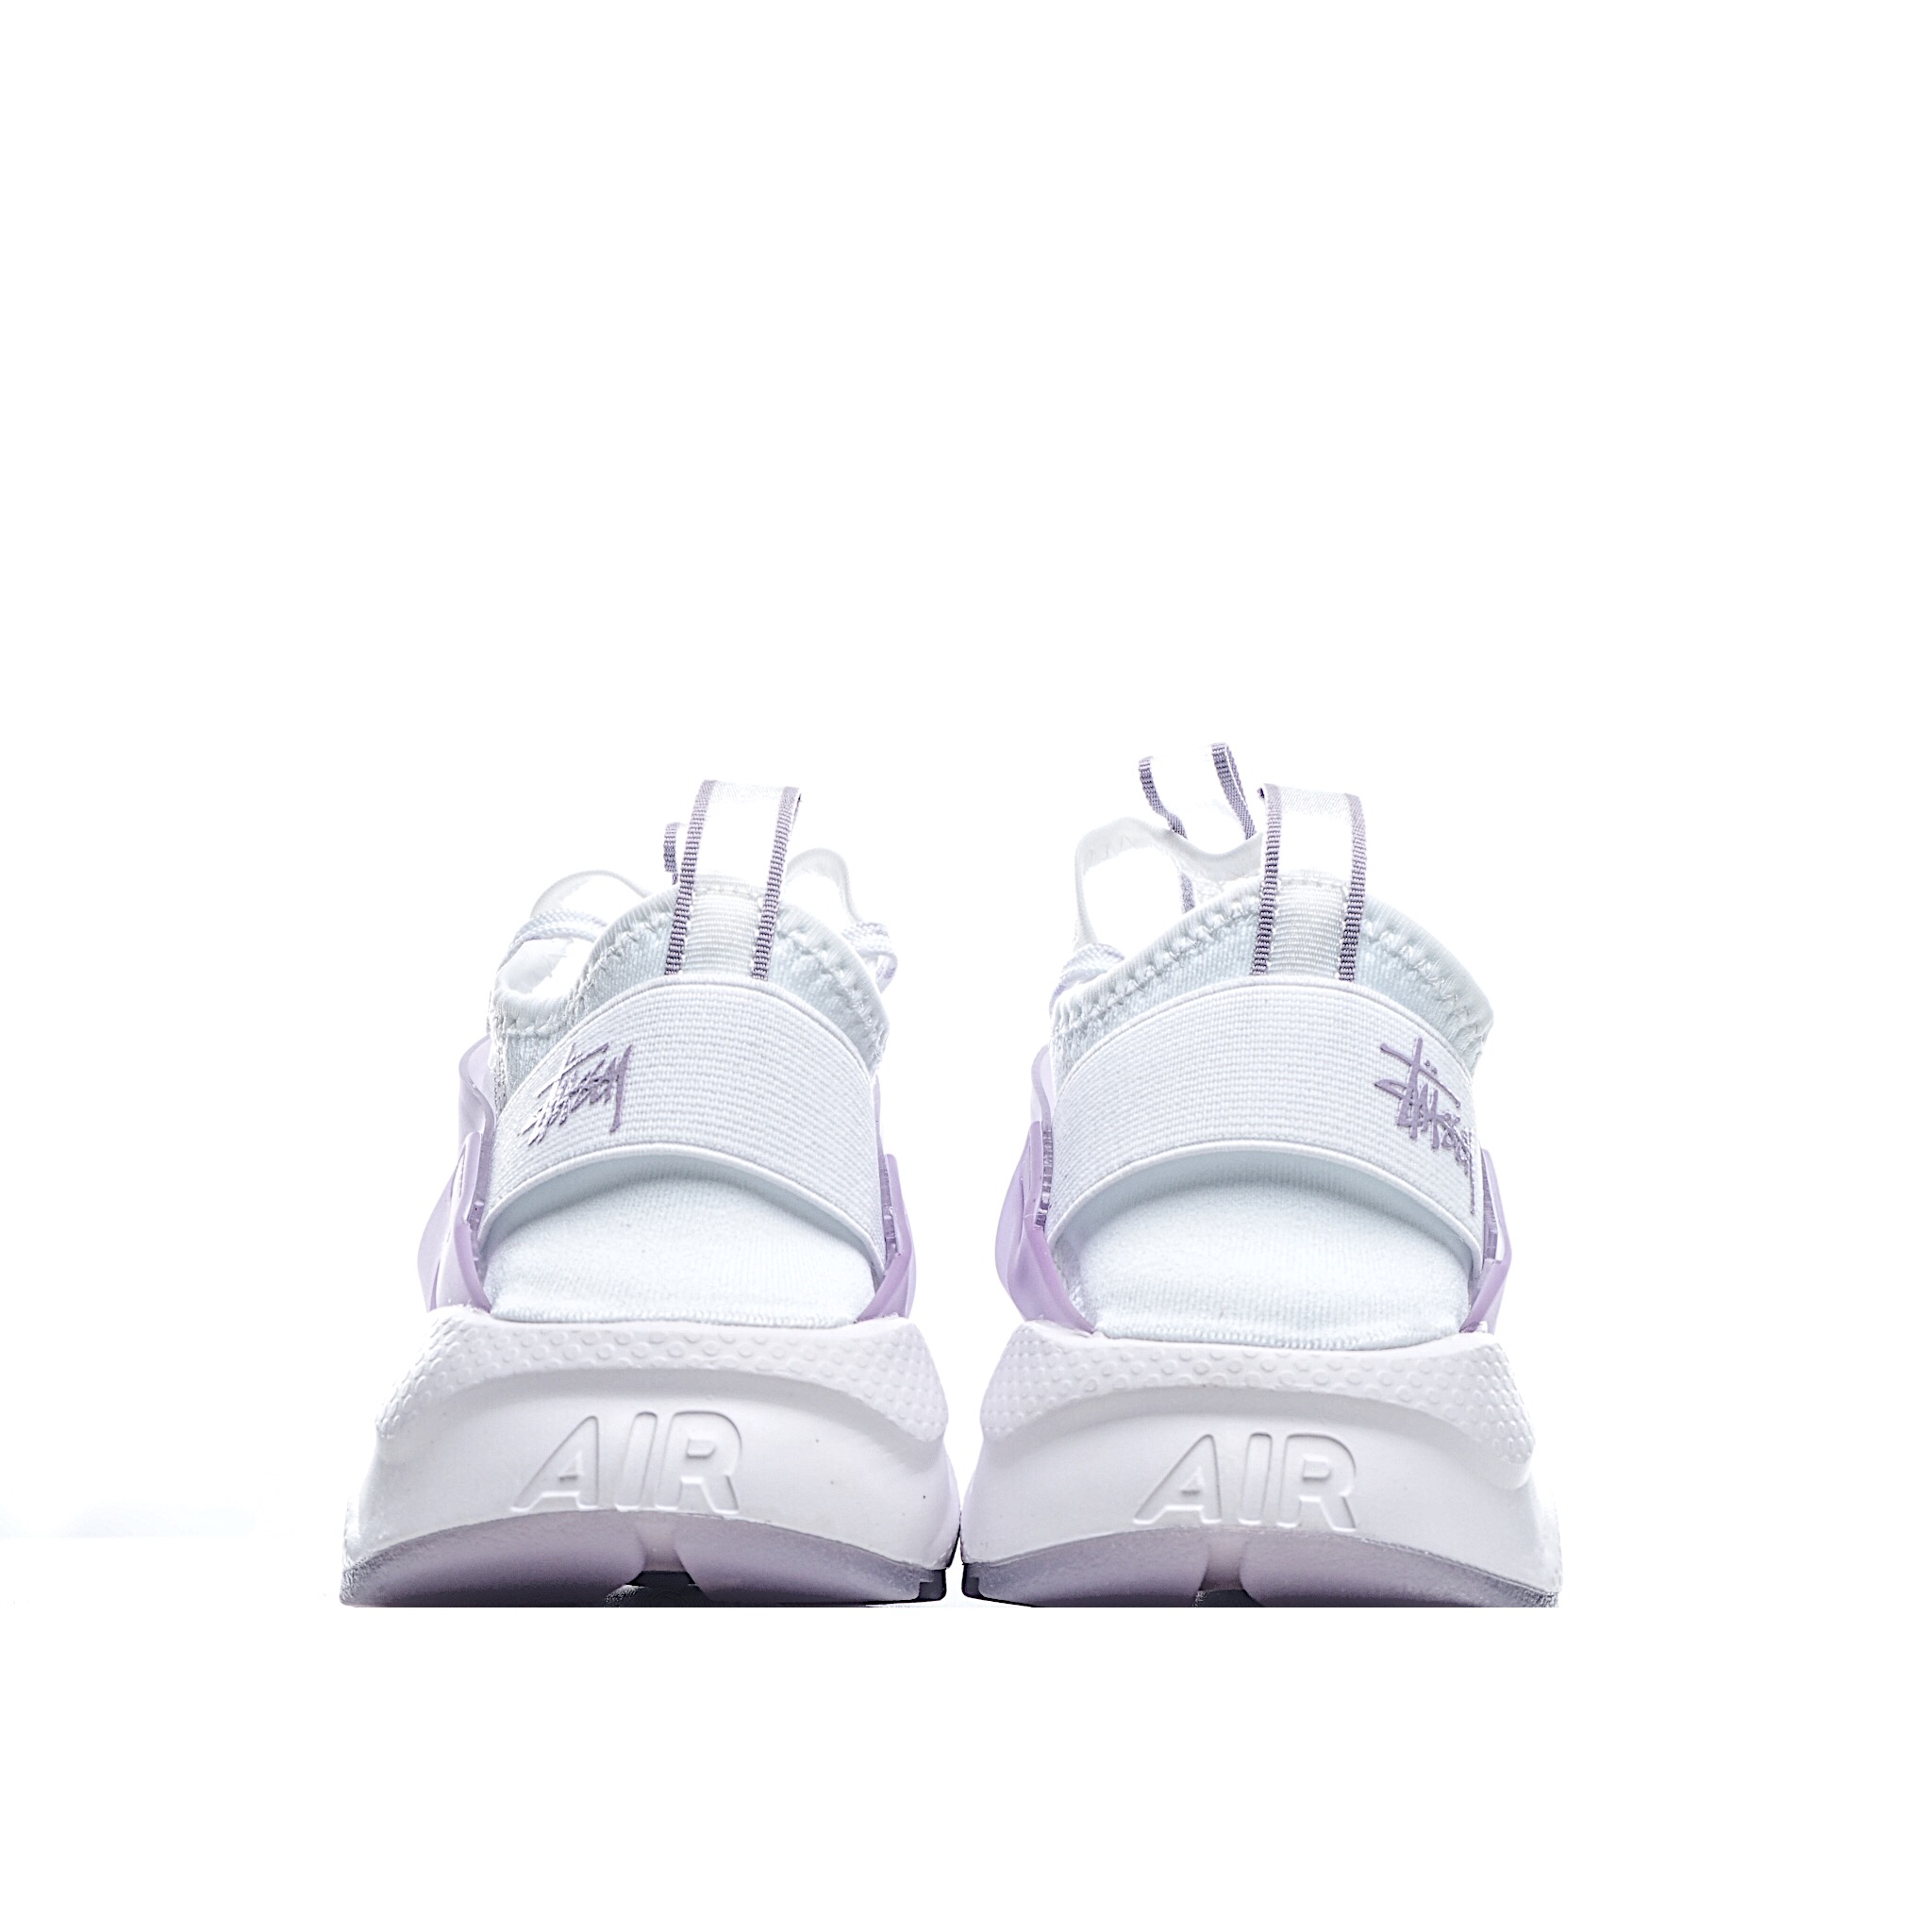 Nike Air Huarache Run Premium fourth generation jogging shoes imported ...